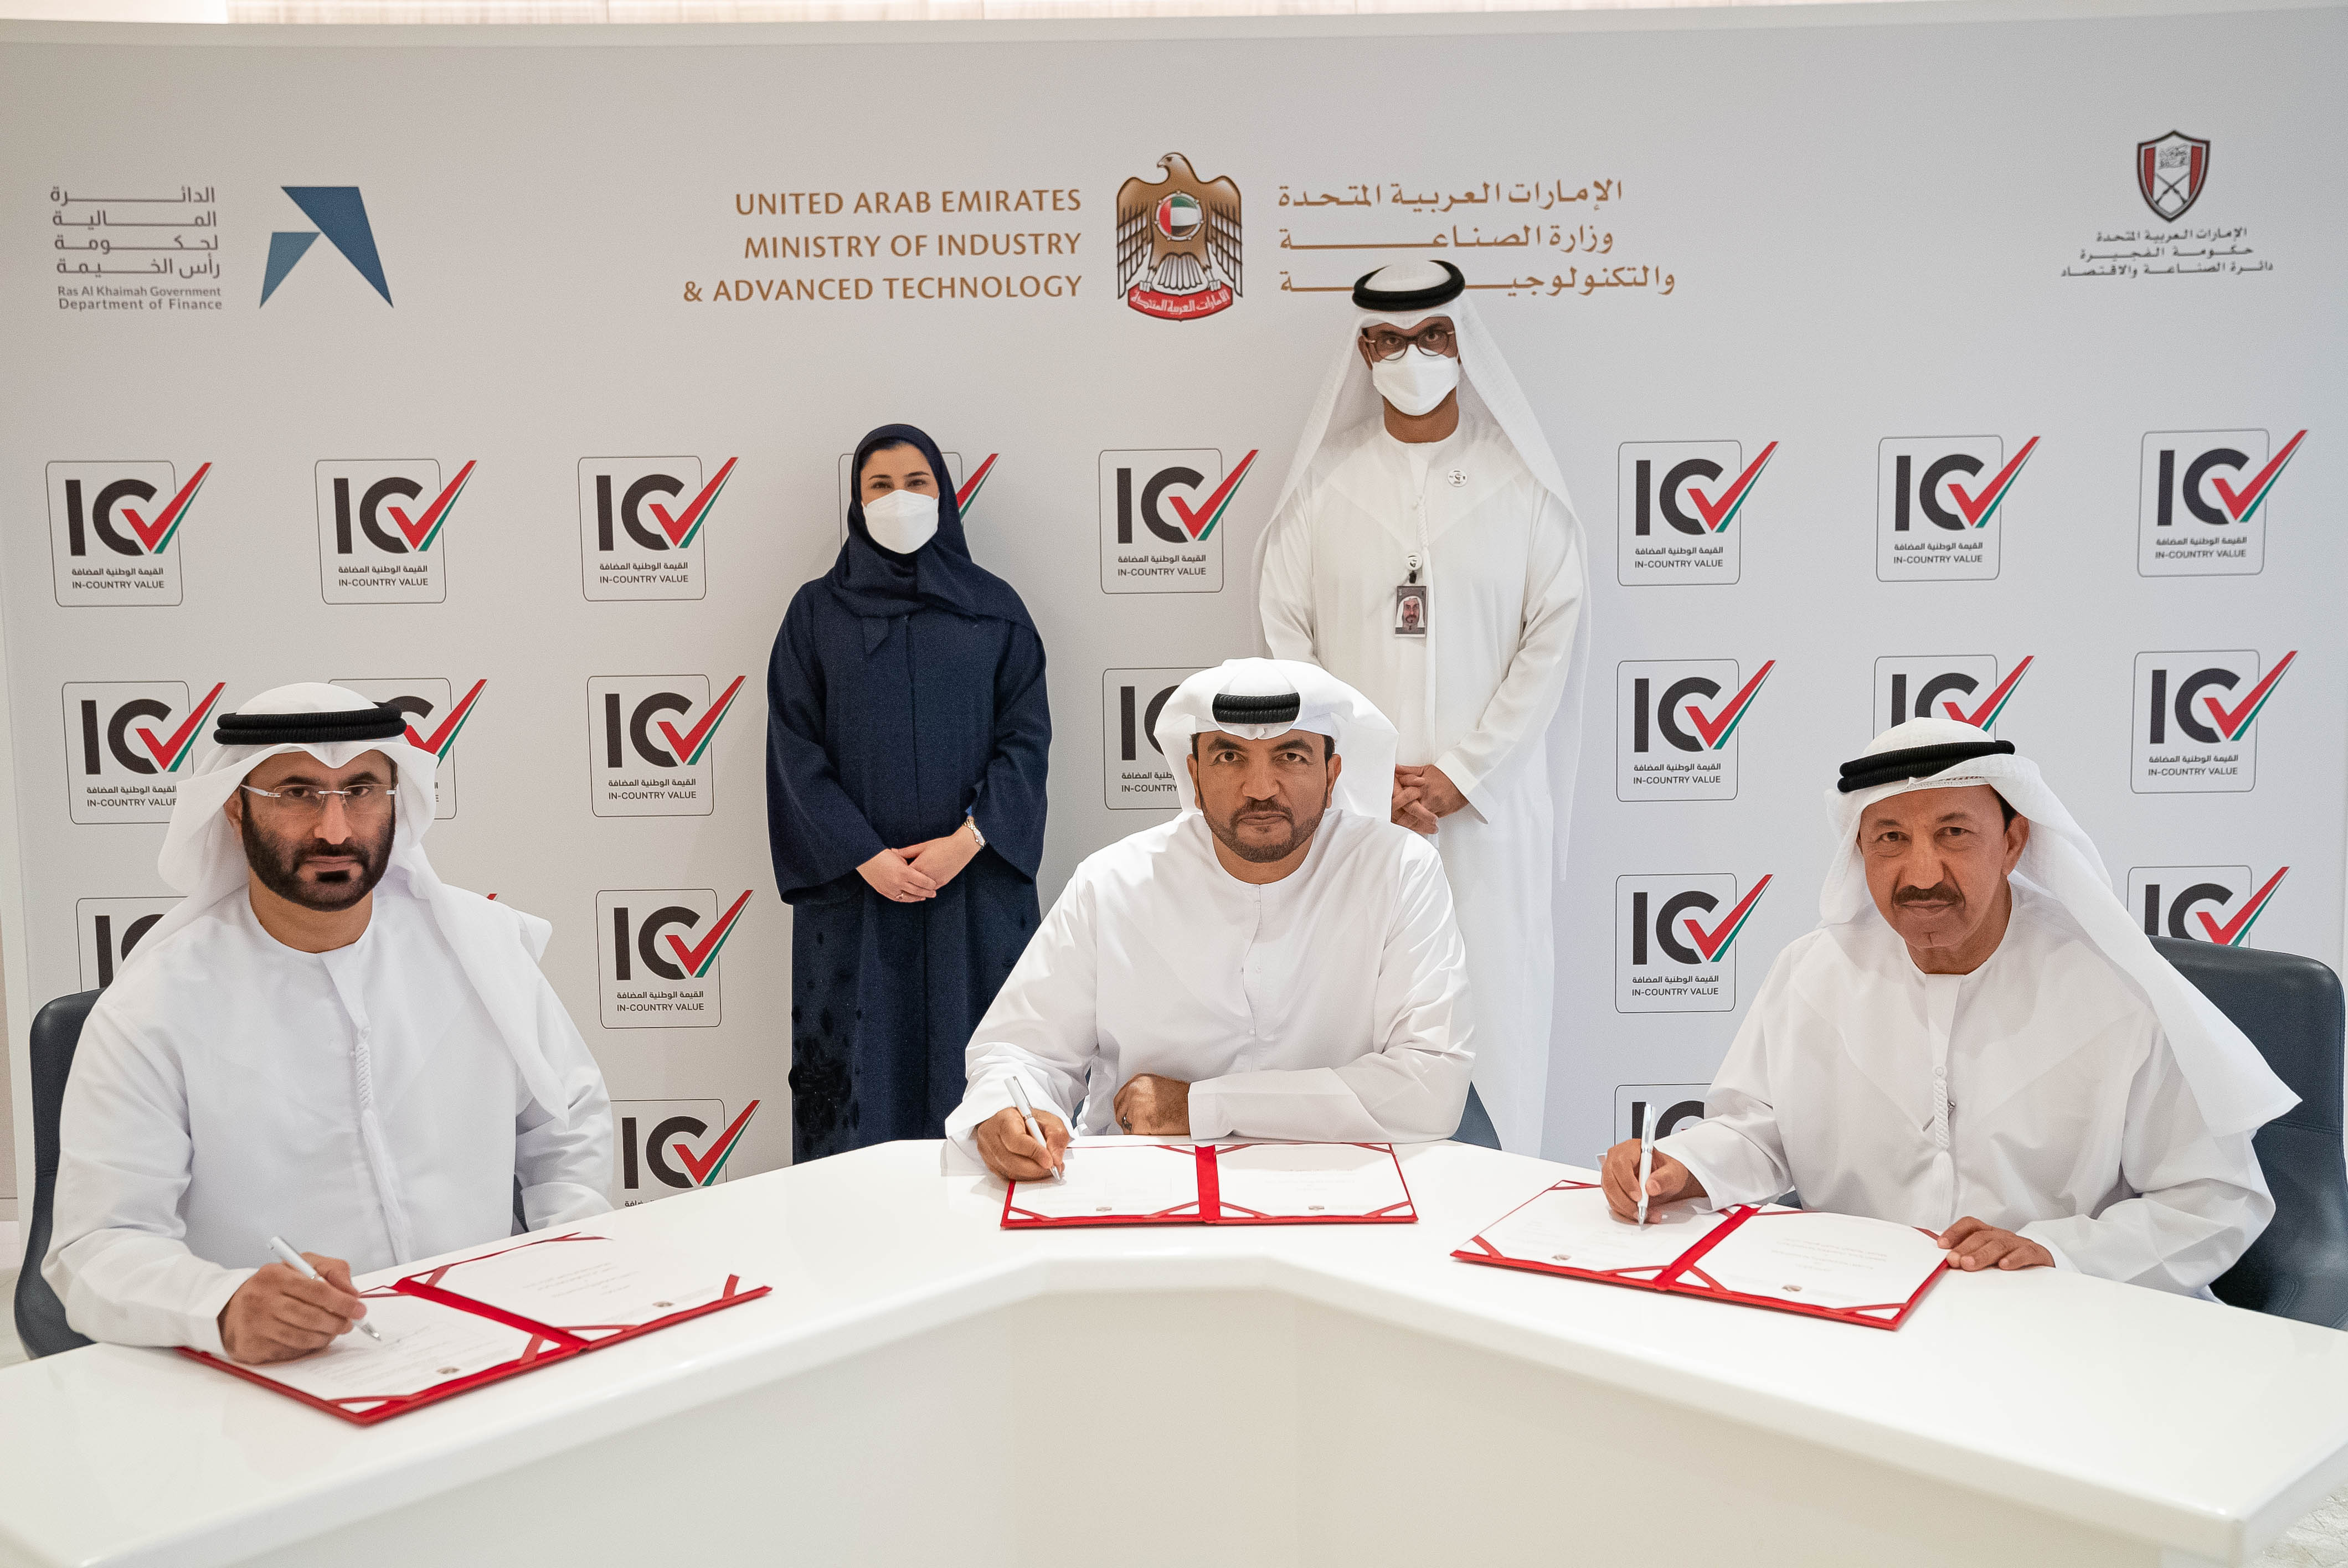 UAE extends National ICV Program to Ras Al Khaimah and Fujairah to support local companies